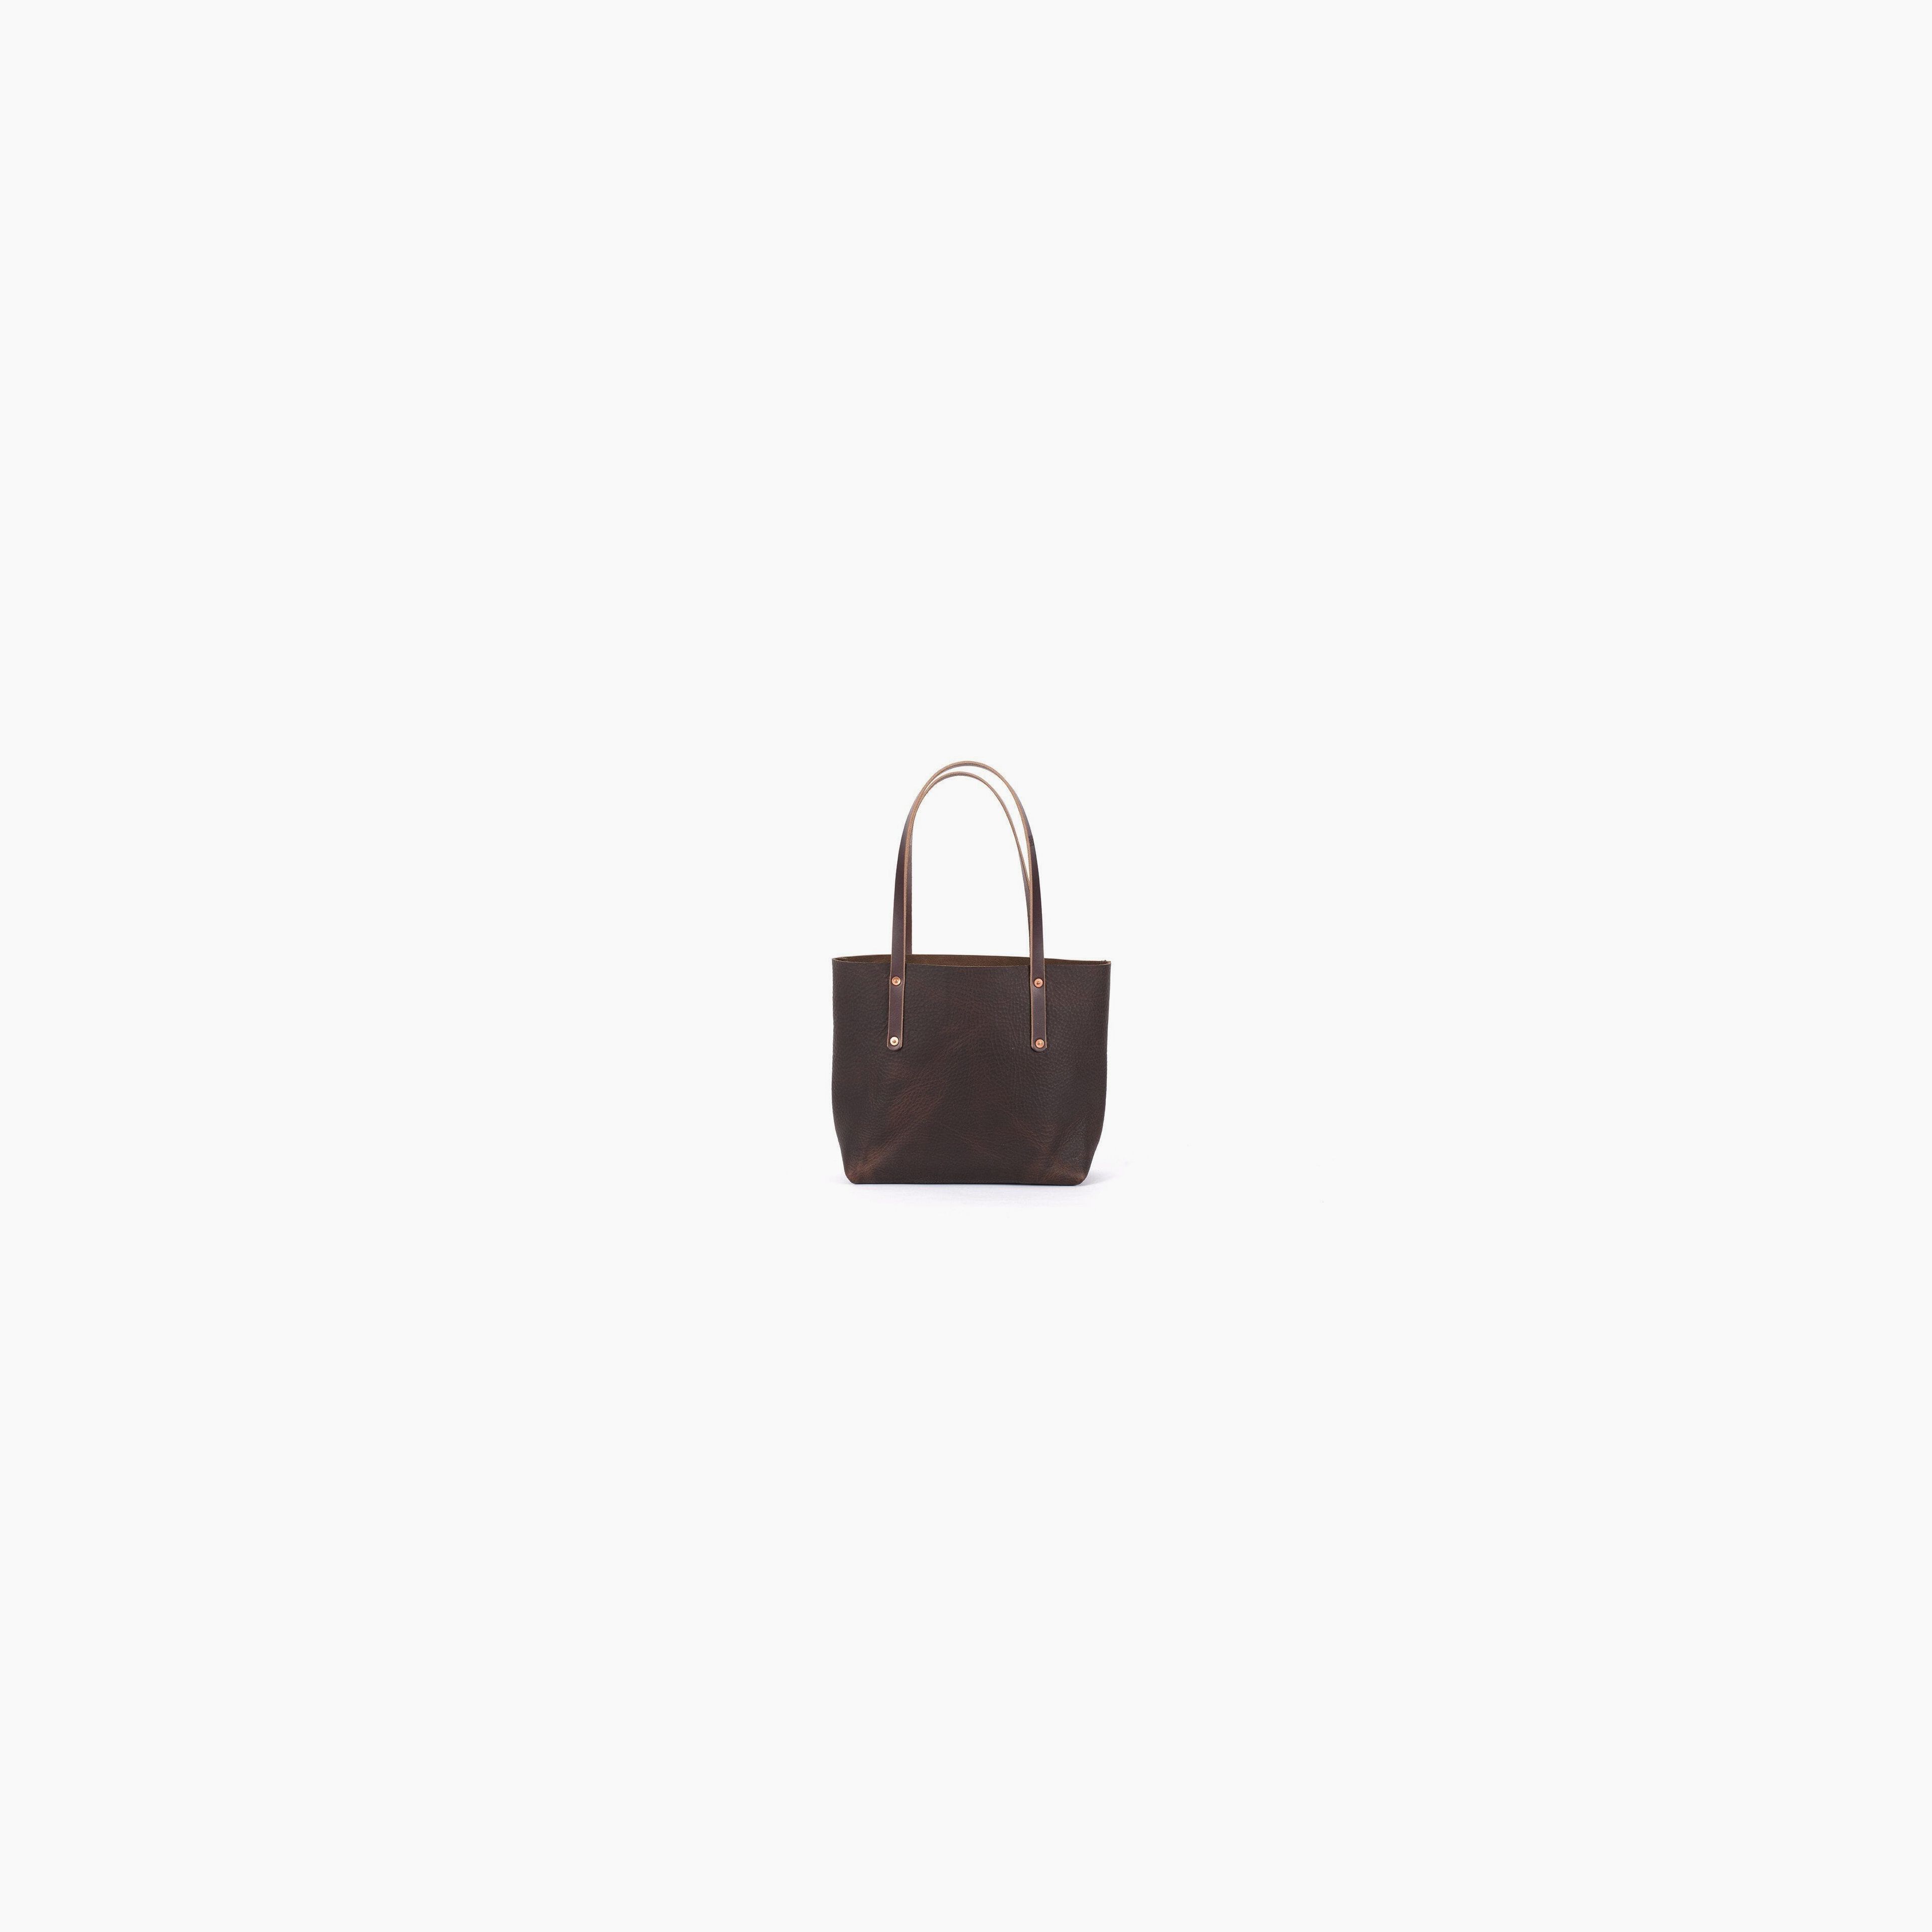 Avery Leather Tote Bag - Medium - Mocha